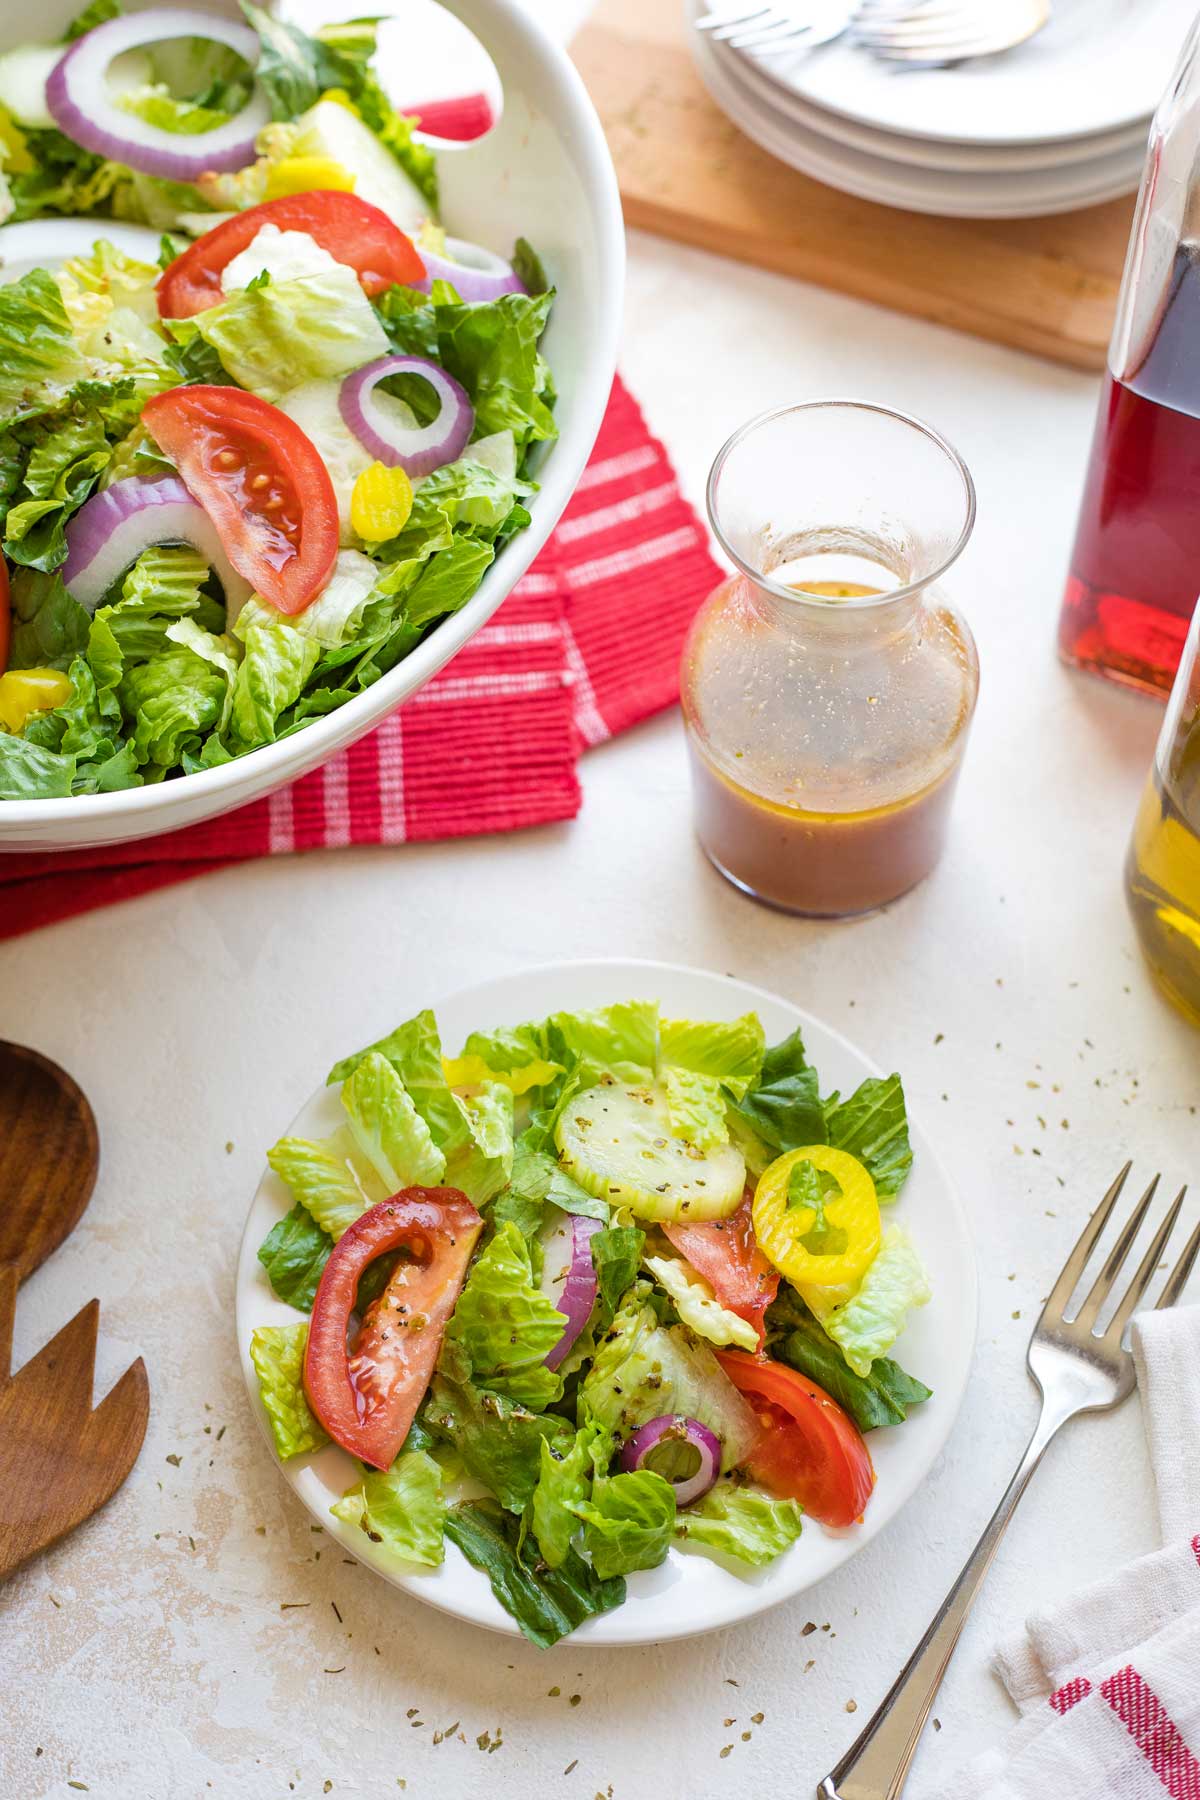 Individual plate of salad, fork, bottle of vinaigrette, serving bowl of salad, extra plates and forks, bottles of oil and red wine vinegar.